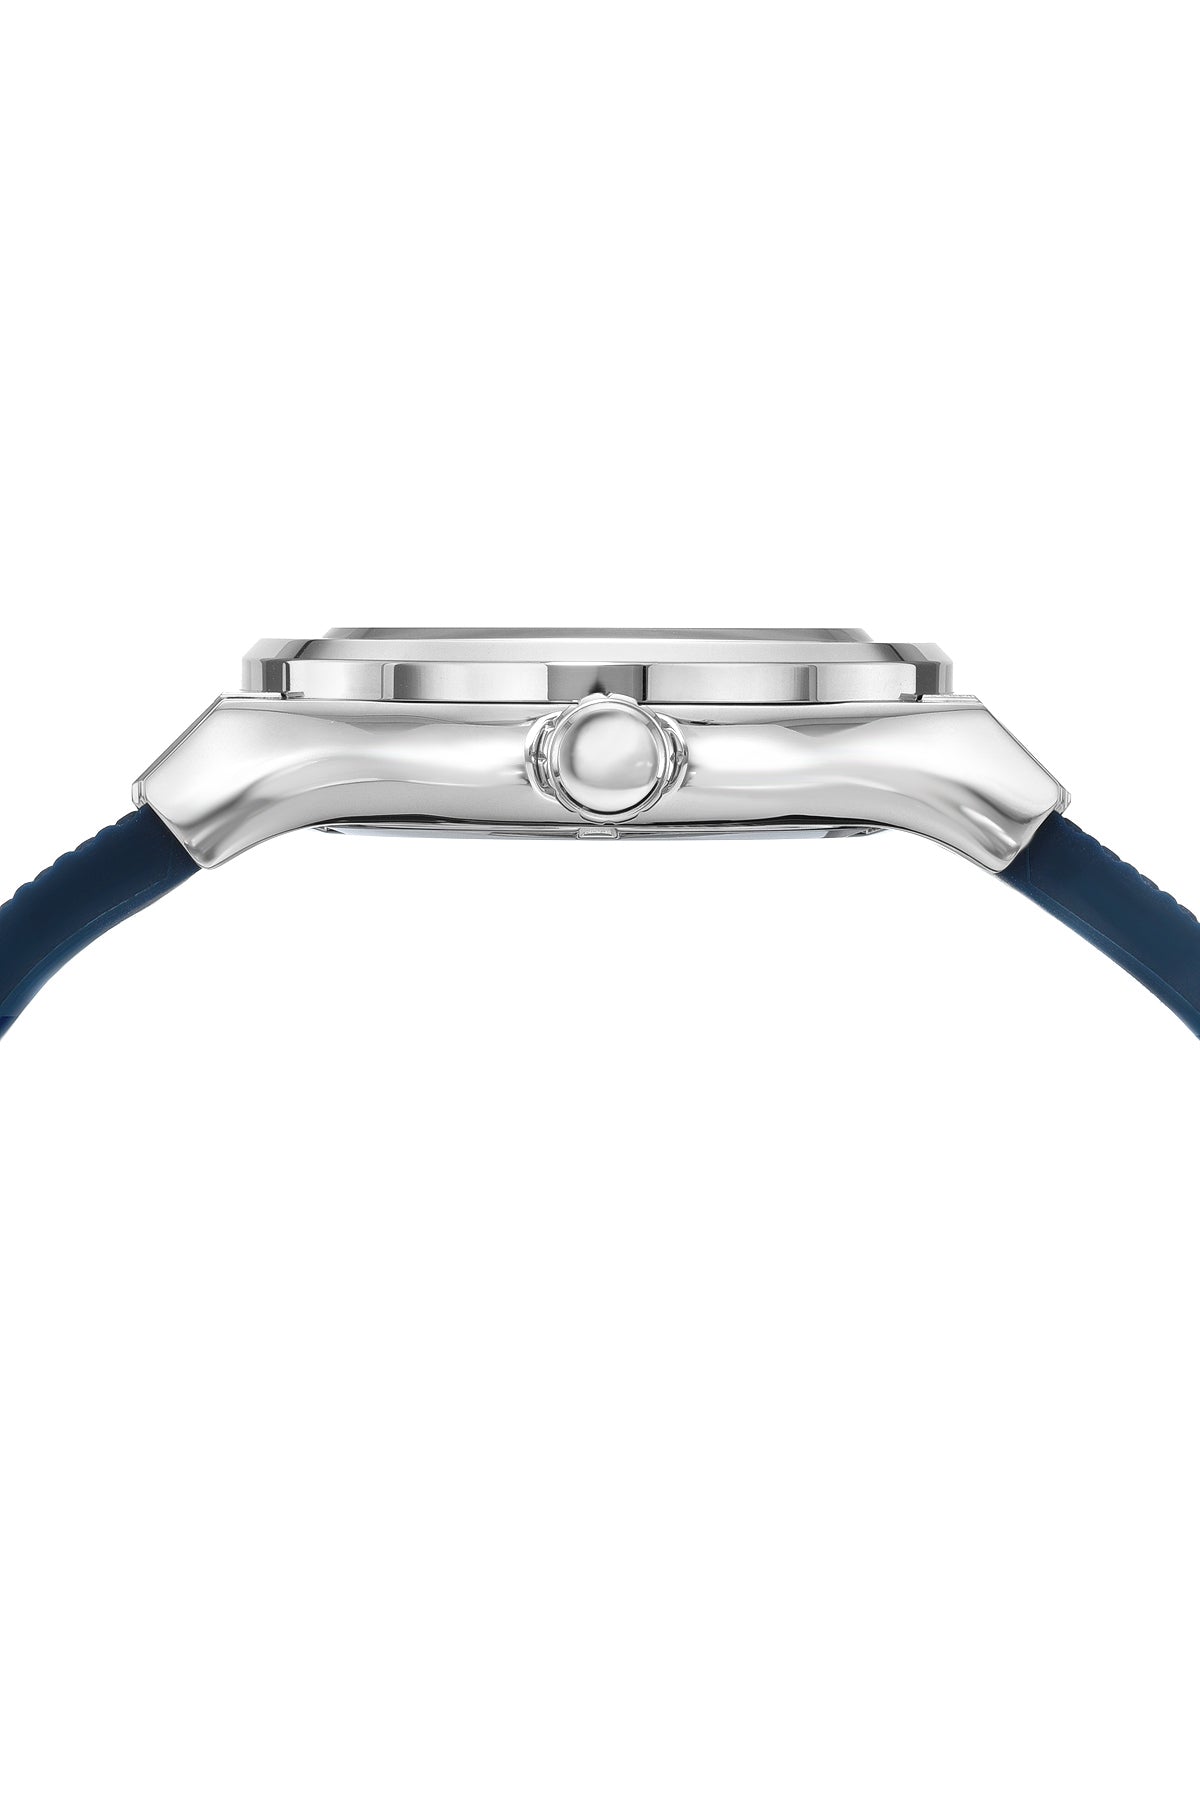 Porsamo Bleu Cruz Luxury Automatic Men's Silicon Strap Watch, With Skeleton Dial, Silver Blue 1222ACRR